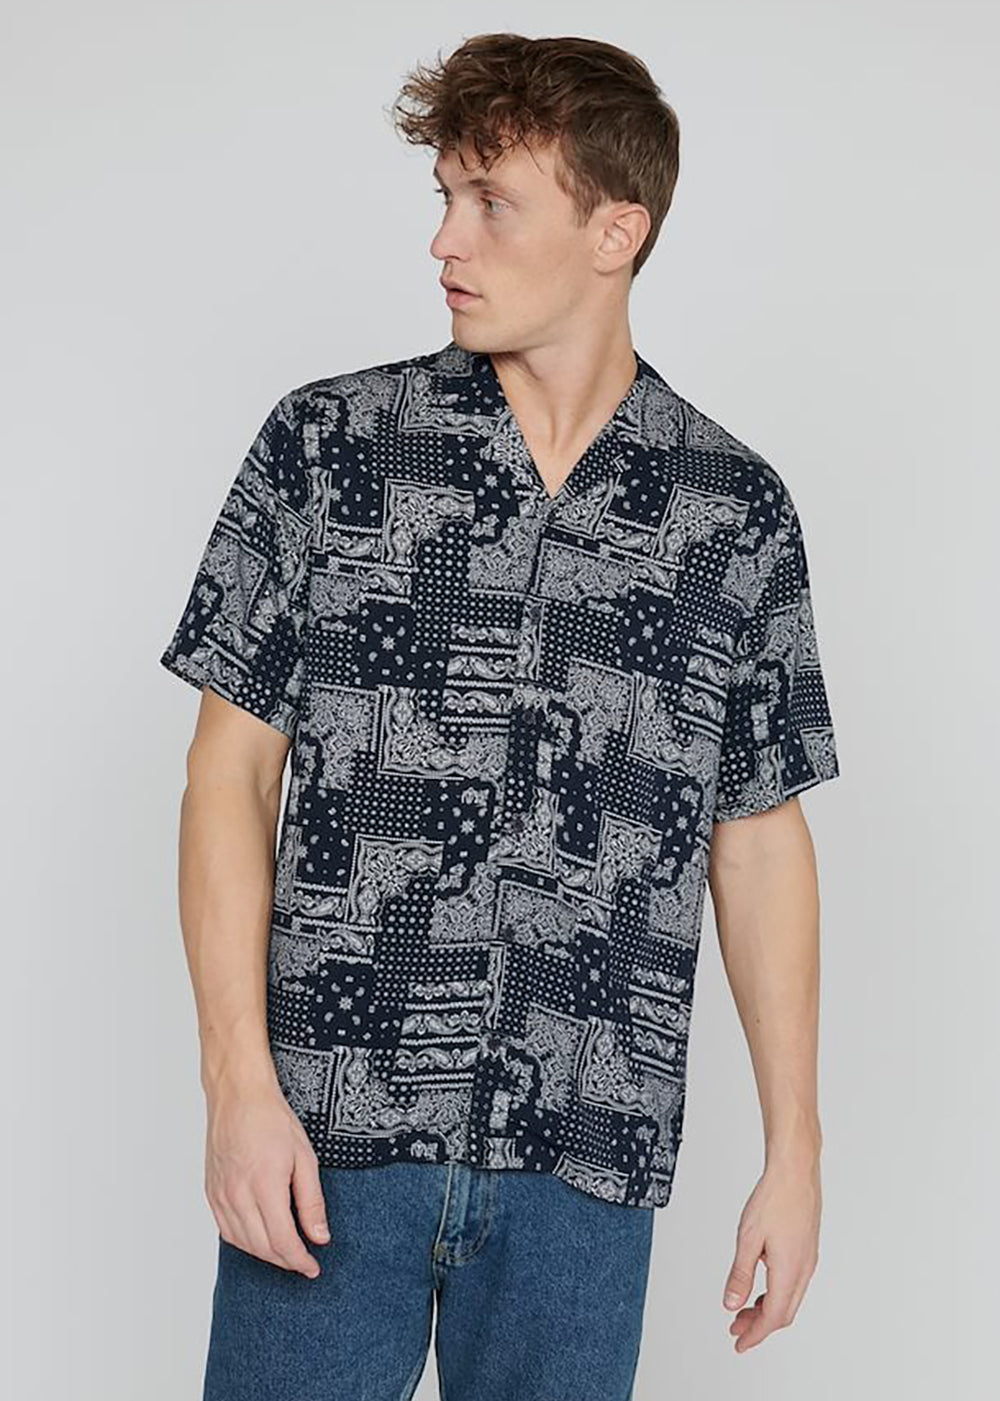 Klampo Short Sleeve Shirt - Dark Navy - Matinique Canada - Danali